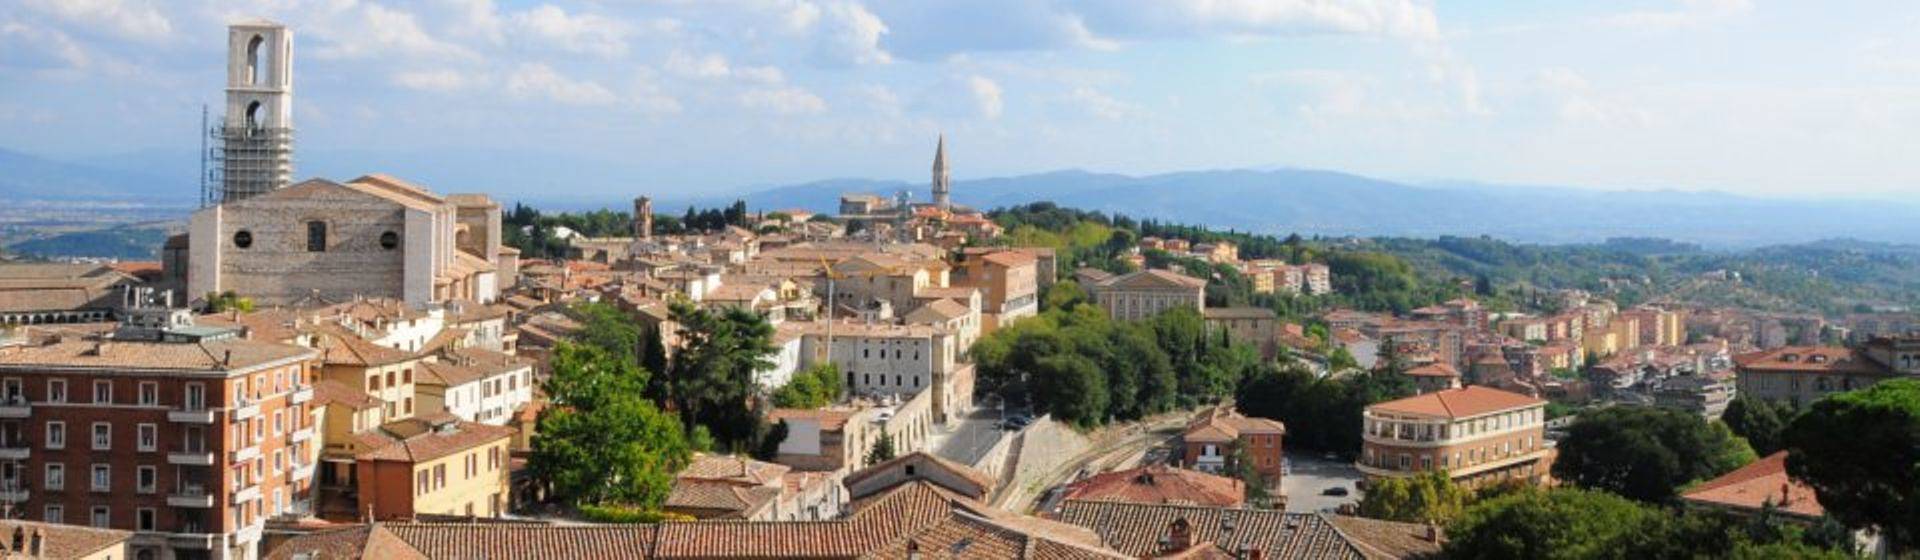 Holidays to Perugia Image